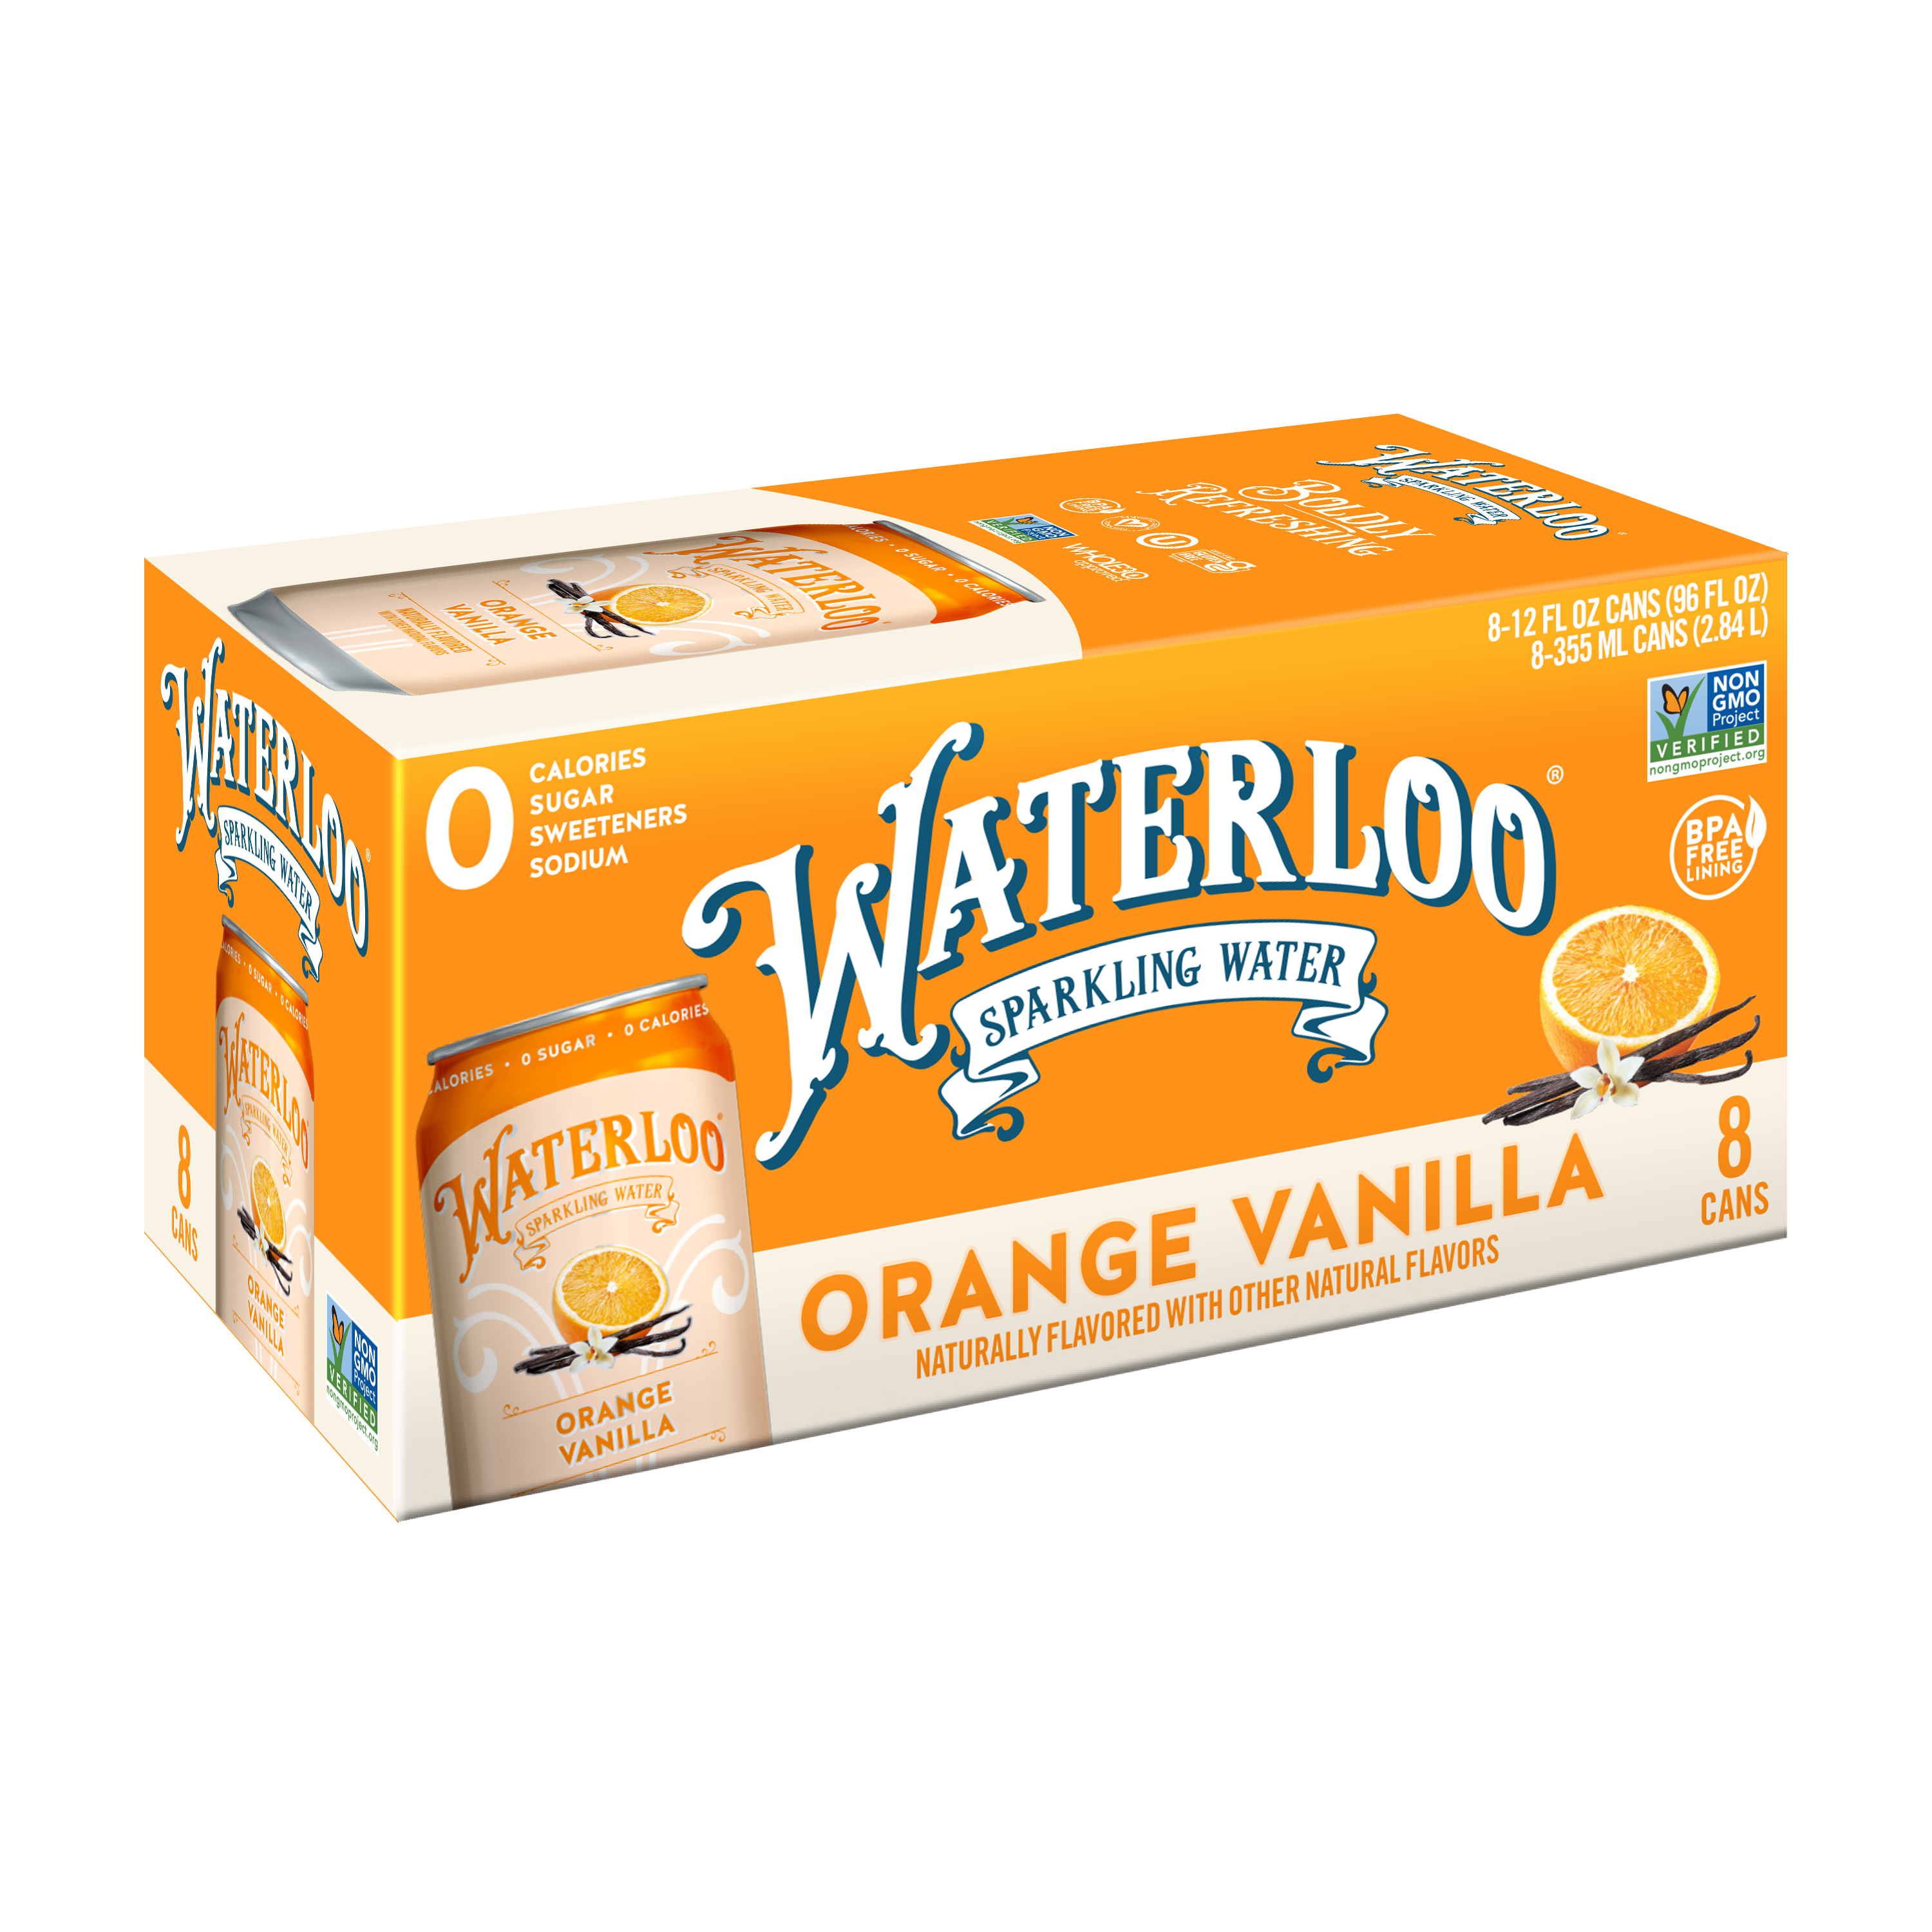 Waterloo Orange Vanilla Sparkling Water 3 innerpacks per case 96.0 fl